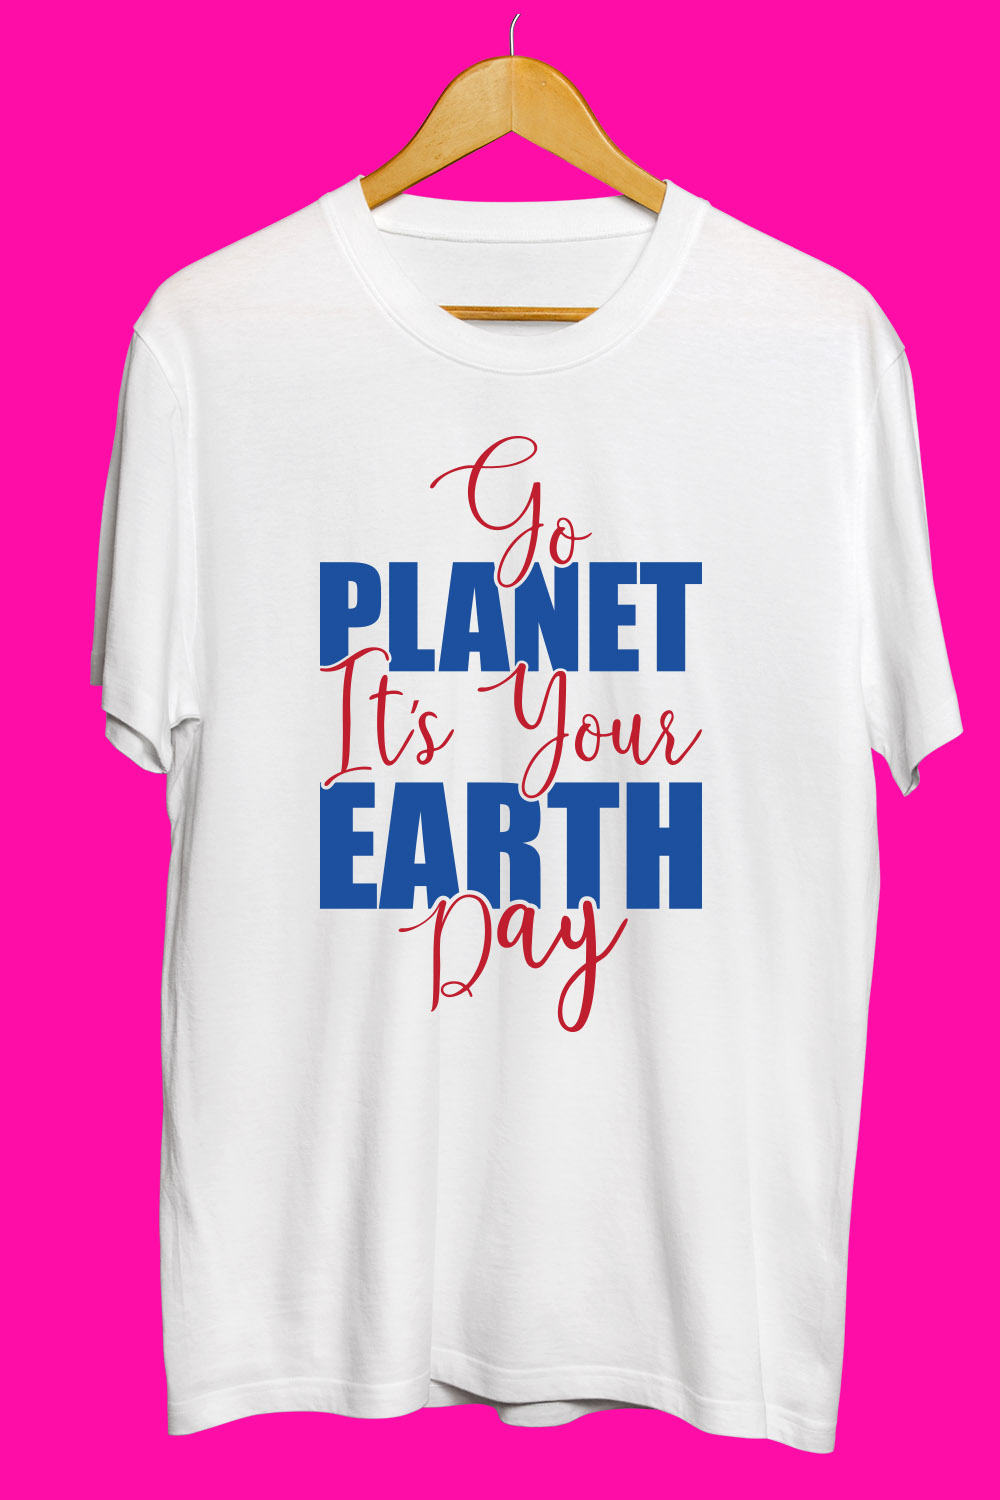 Earth day SVG T Shirt Designs Bundle pinterest preview image.